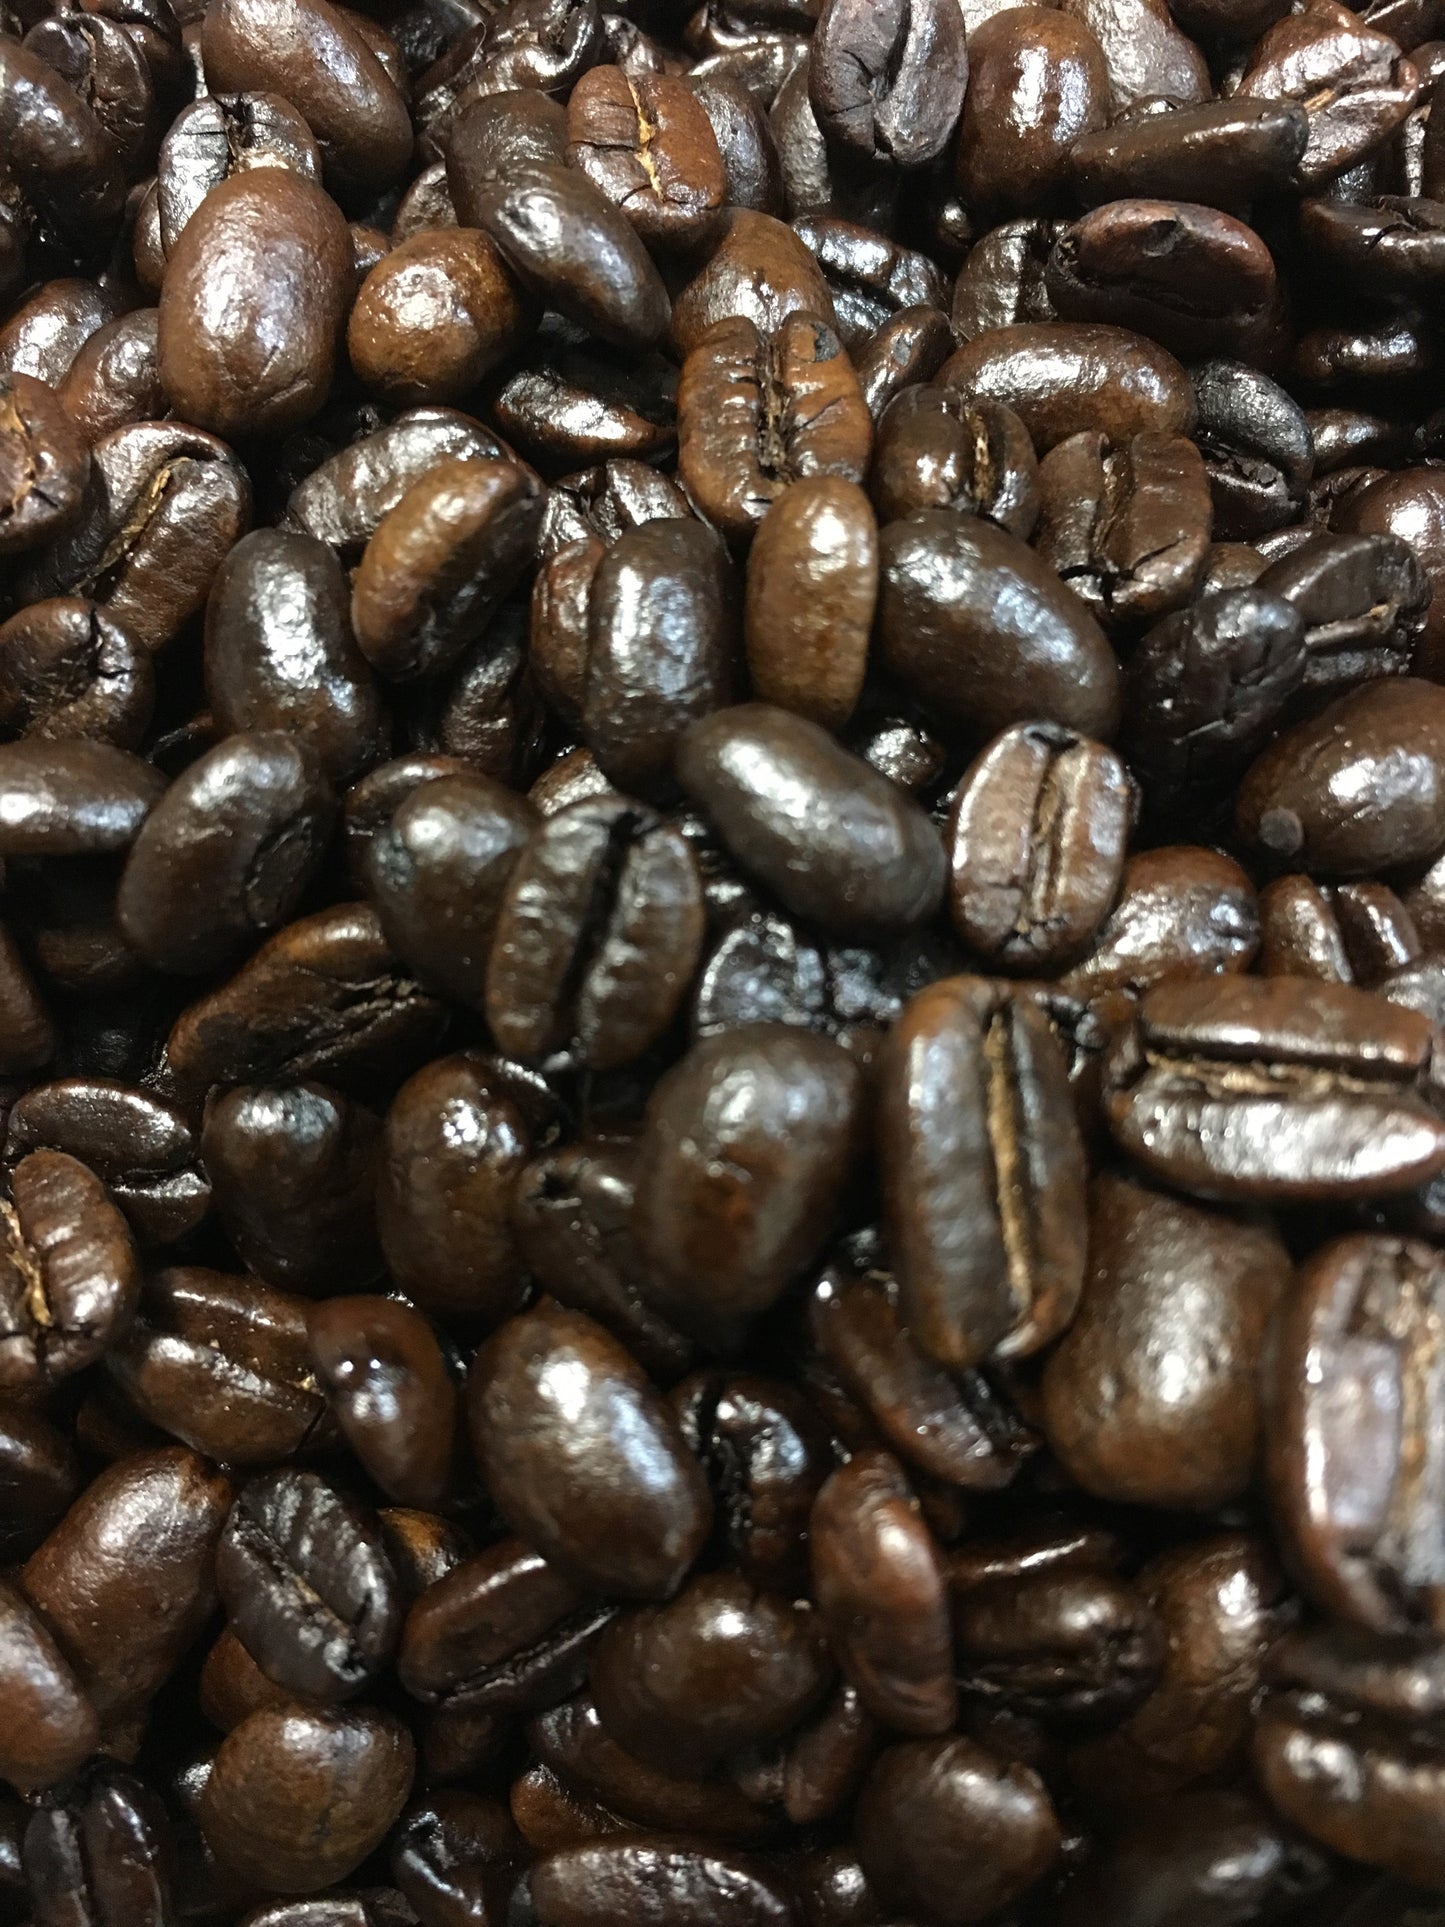 El Salvador Dark -Ground or Whole Bean - Mike Shea's Coffee Roasting 